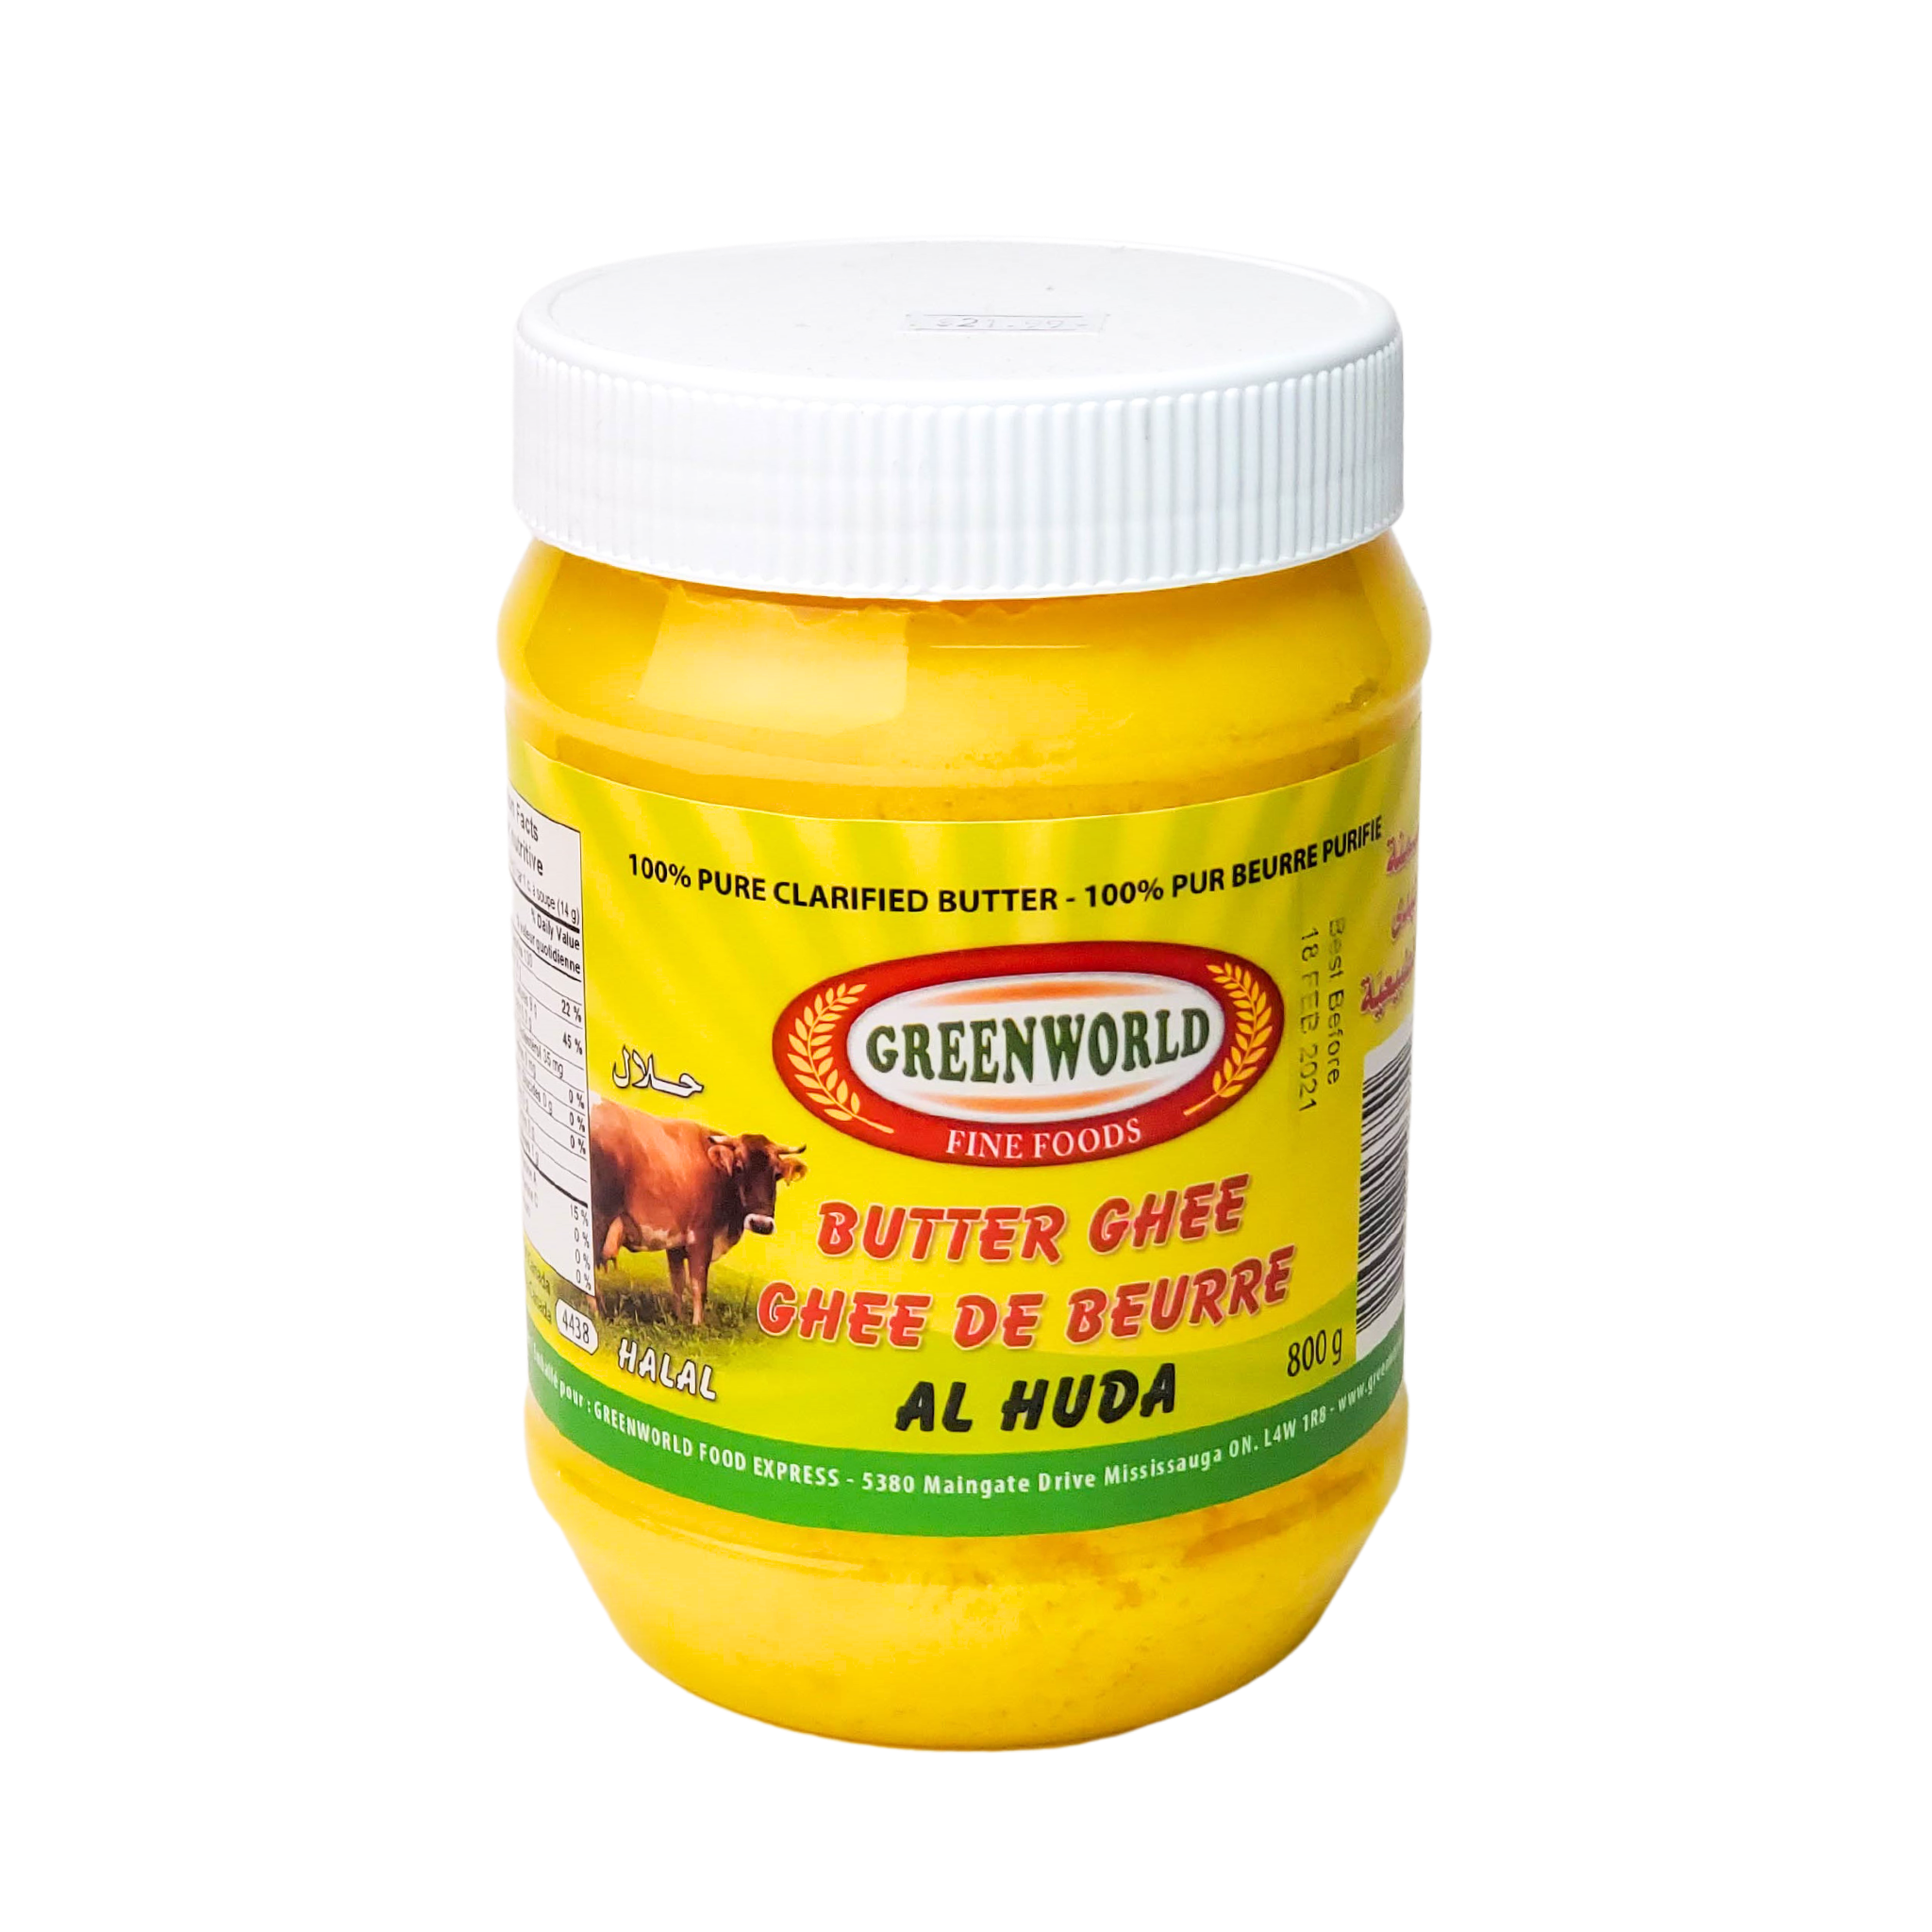 Greenworld Fine foods Butter Ghee Halal Alhuda 800g